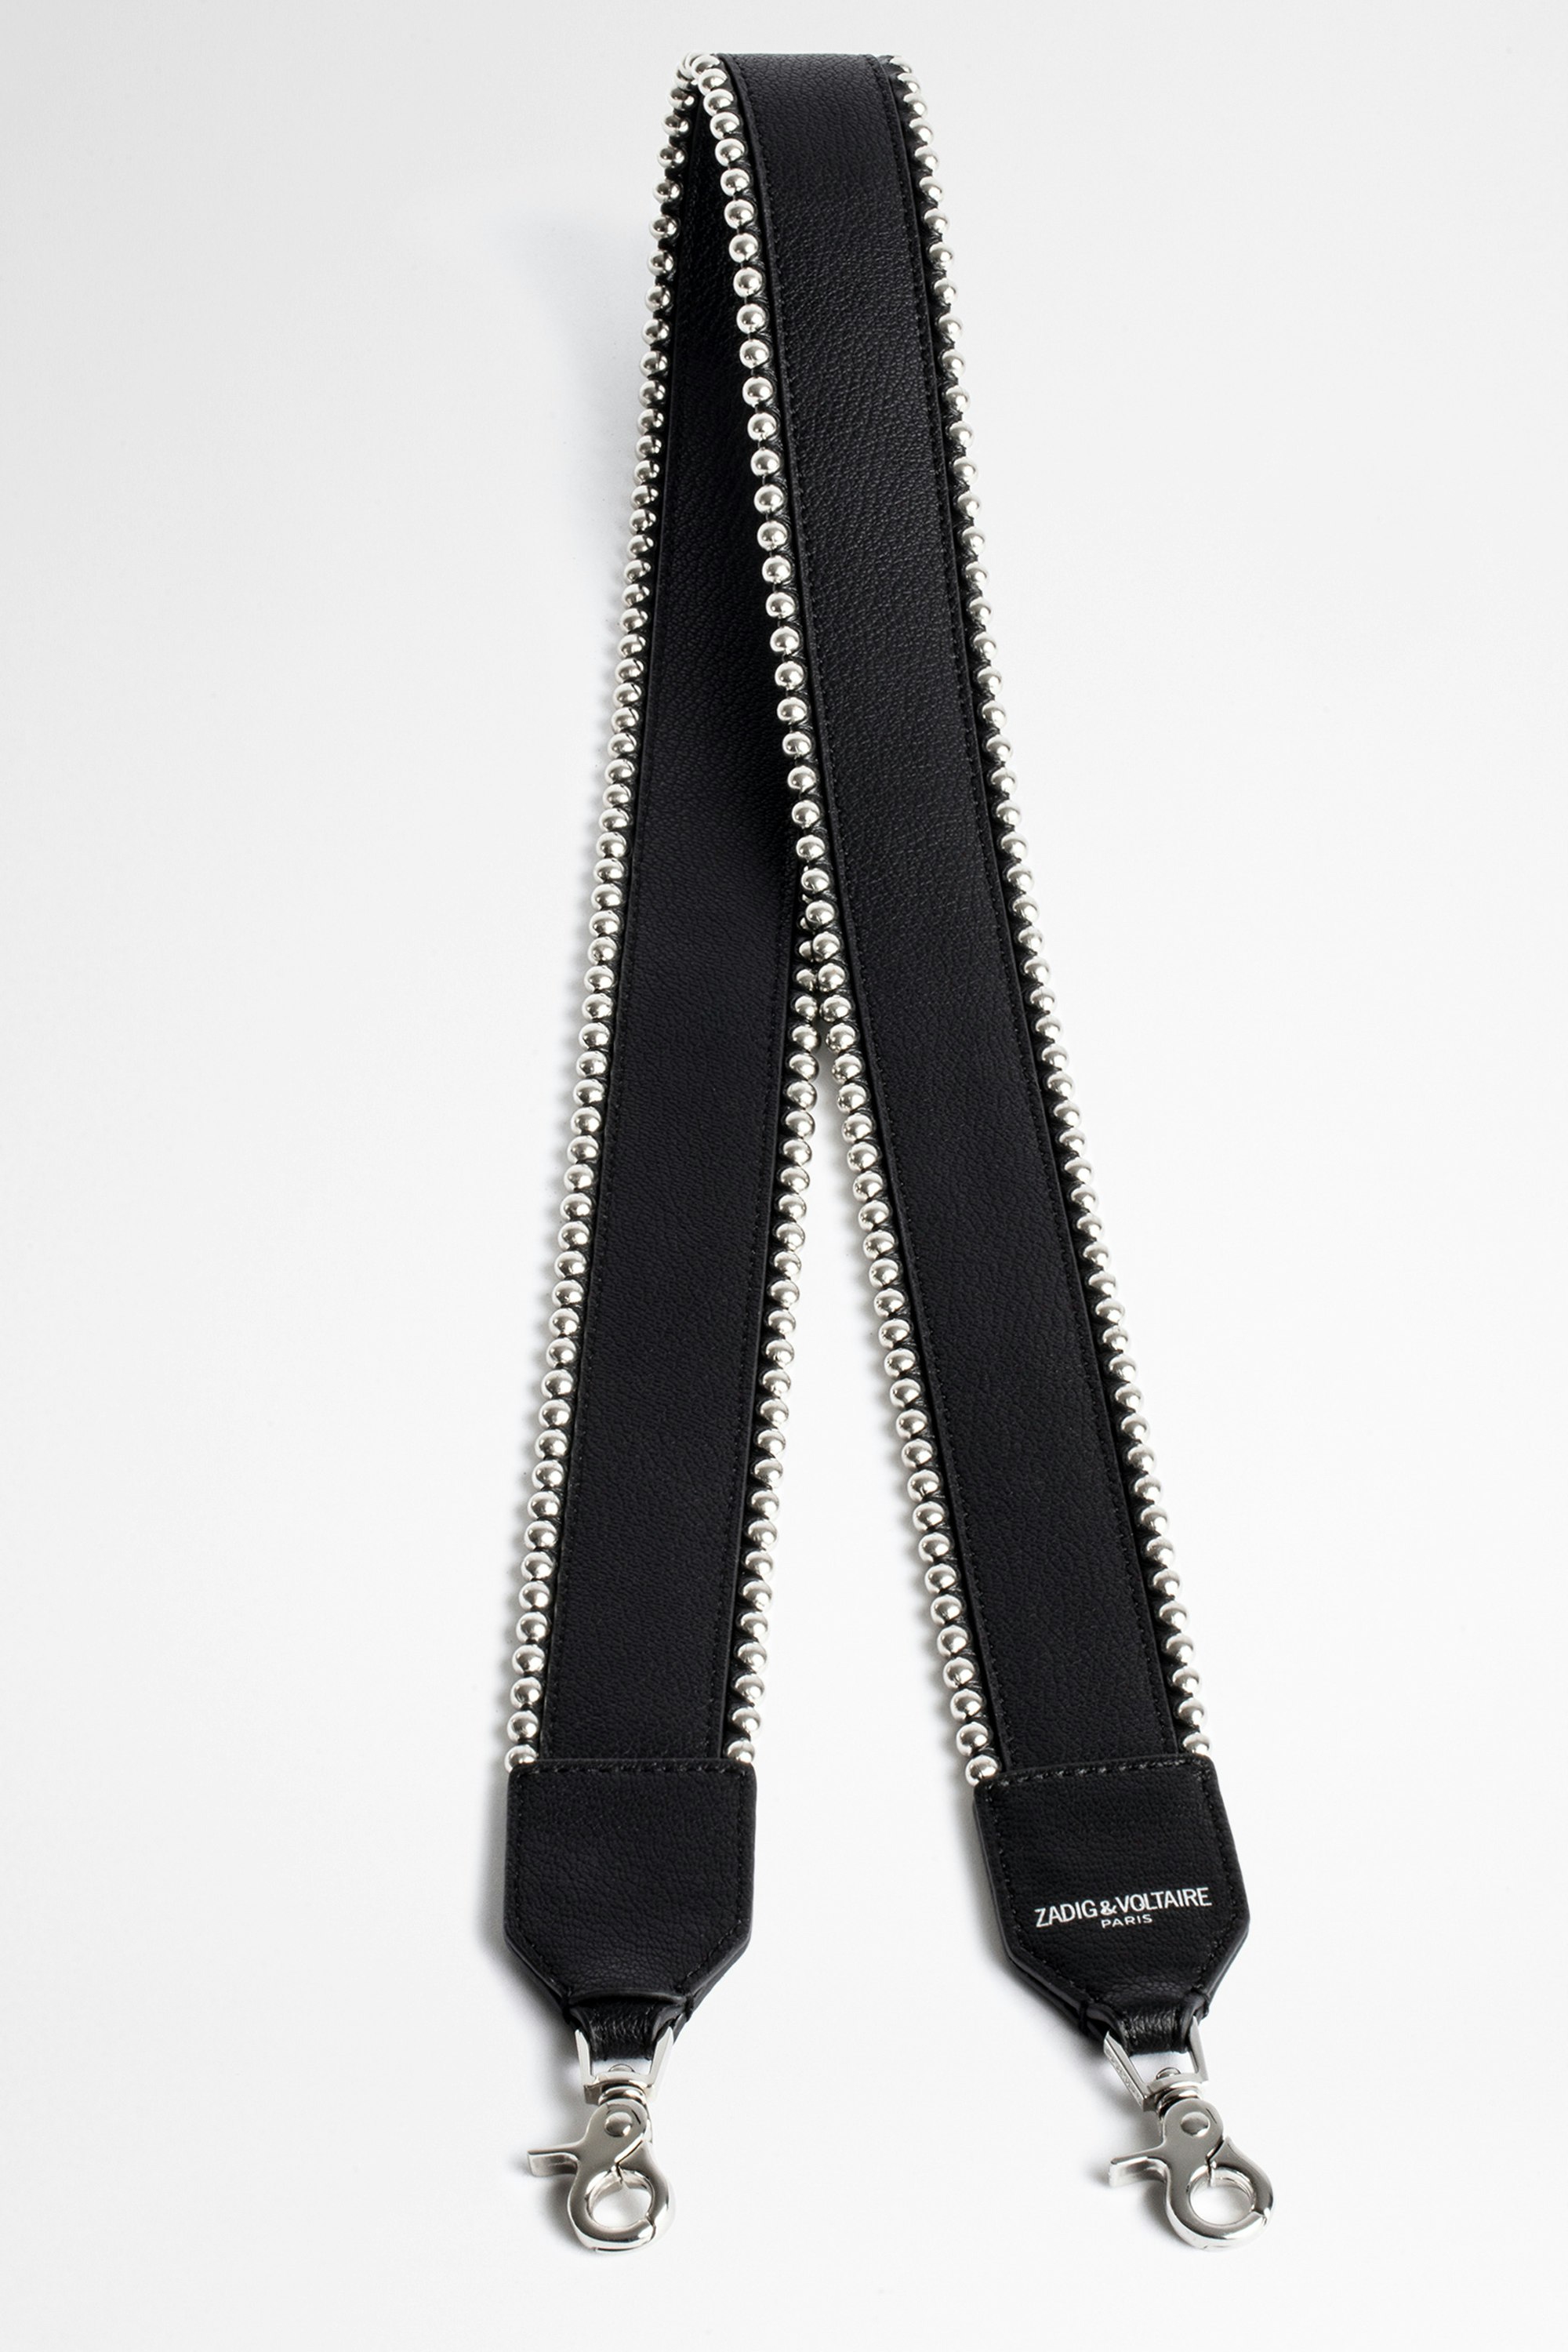 Stud Piping ショルダーストラップ Black leather shoulder strap